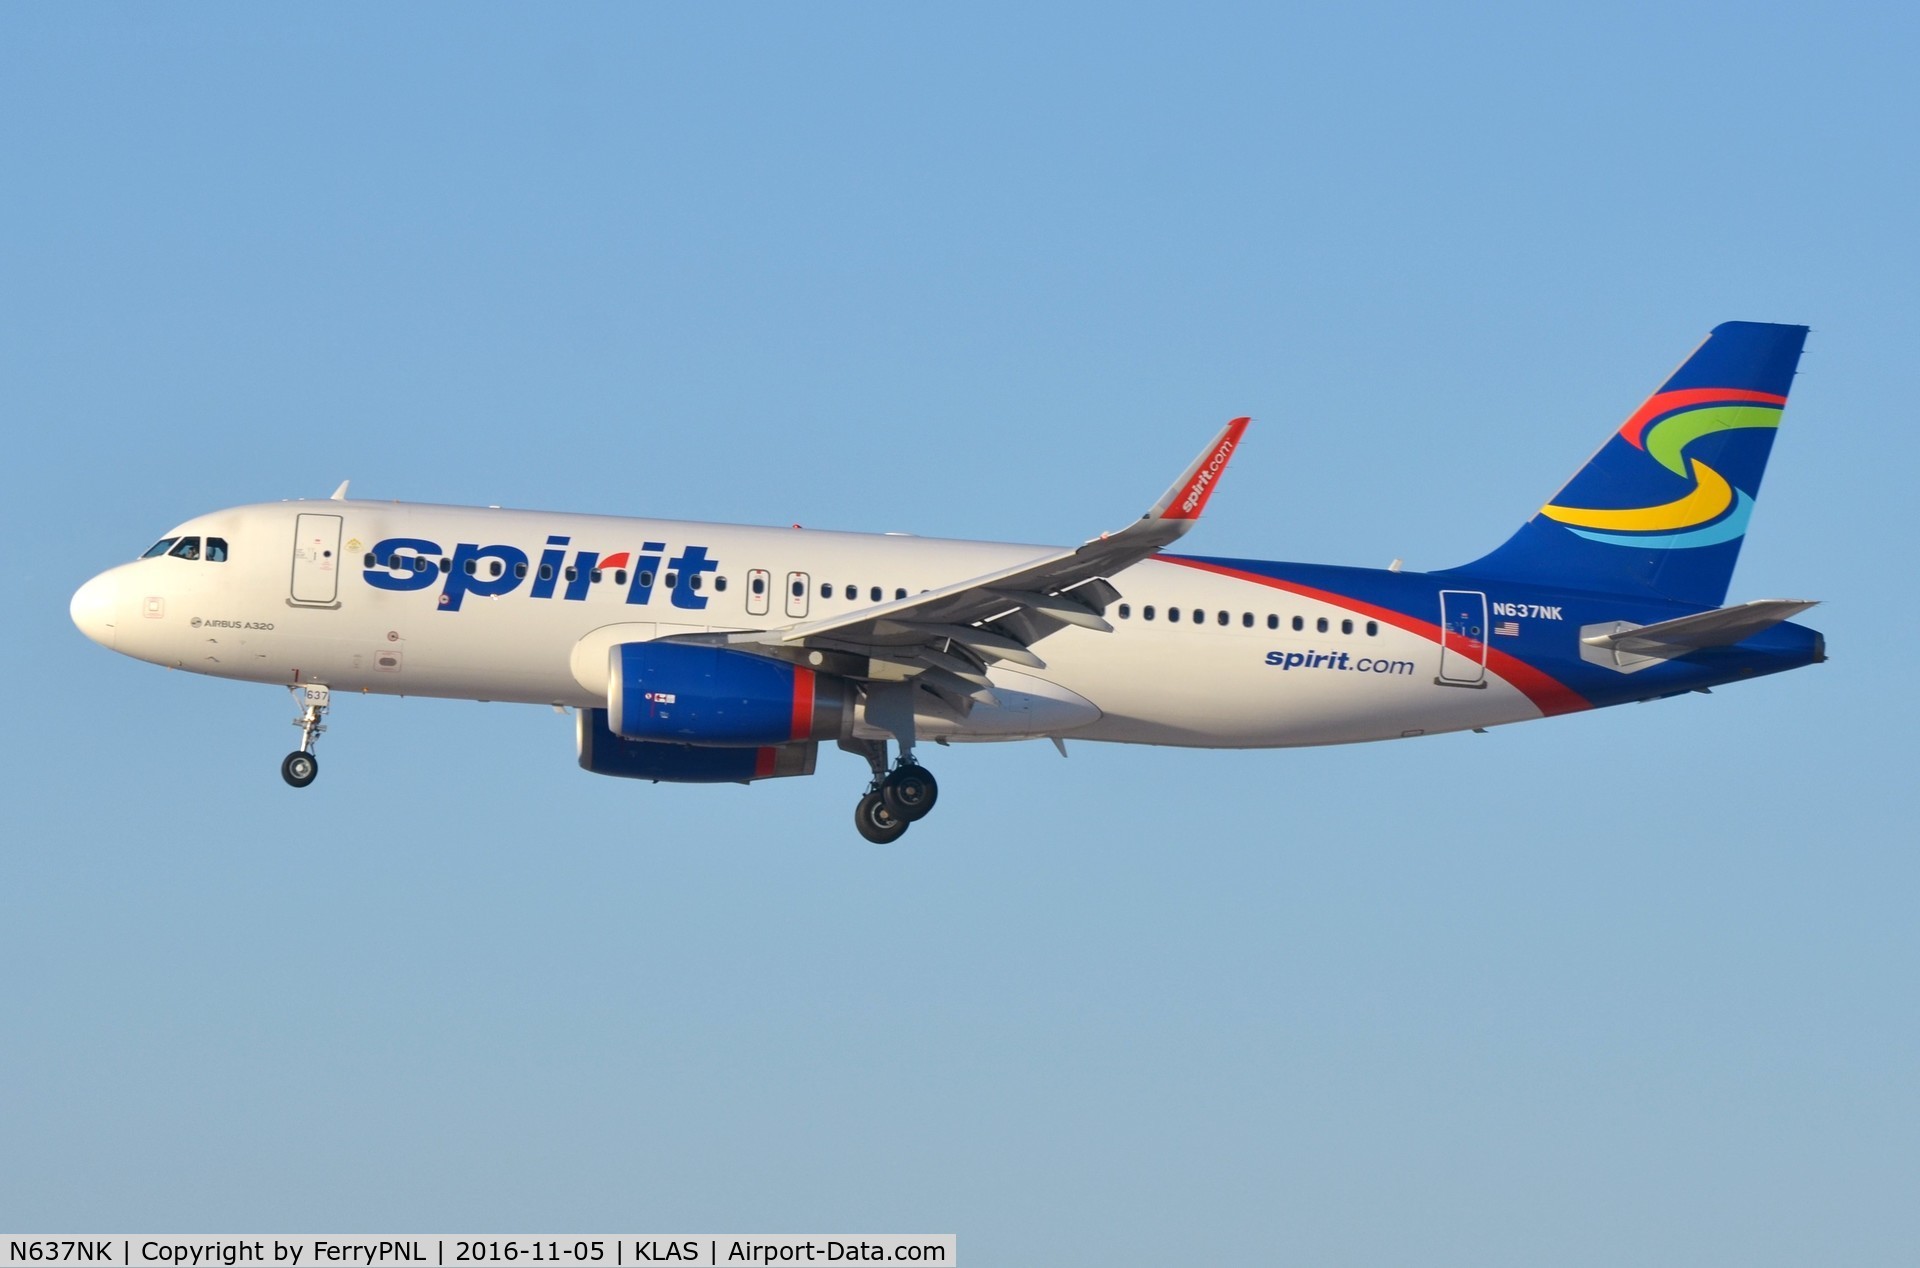 N637NK, 2015 Airbus A320-232 C/N 6436, Spirit A320 landing.